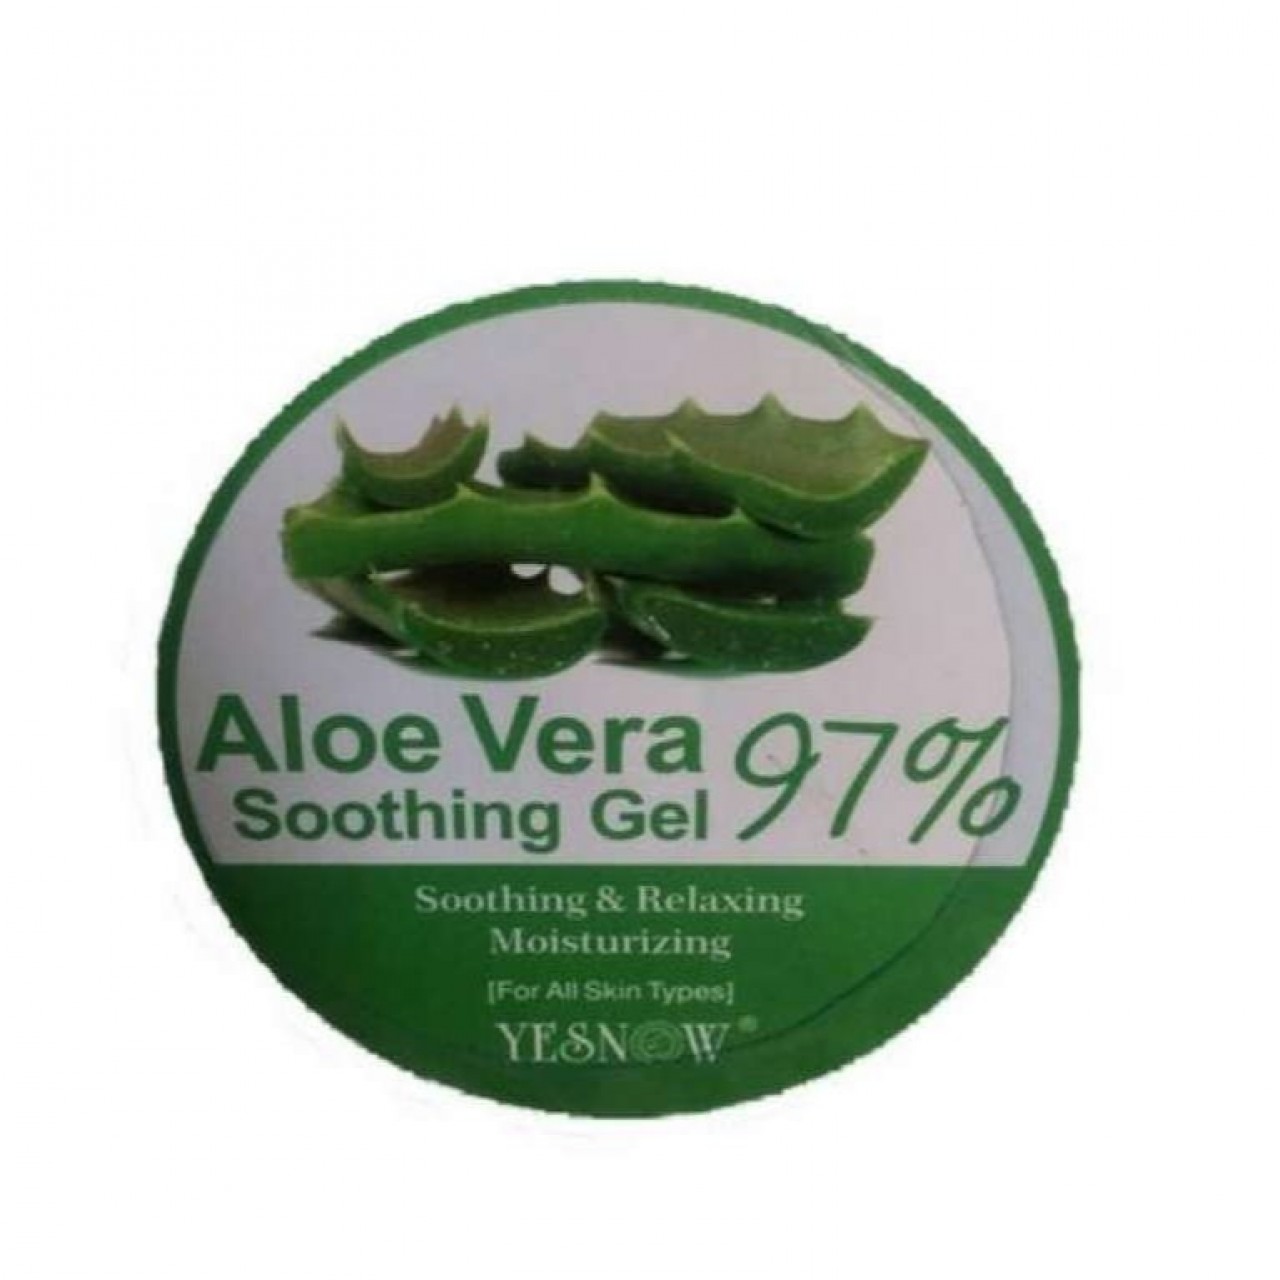 Aloe Vera Soothing Gel 97% Perfect For Fresh Skin - 300g